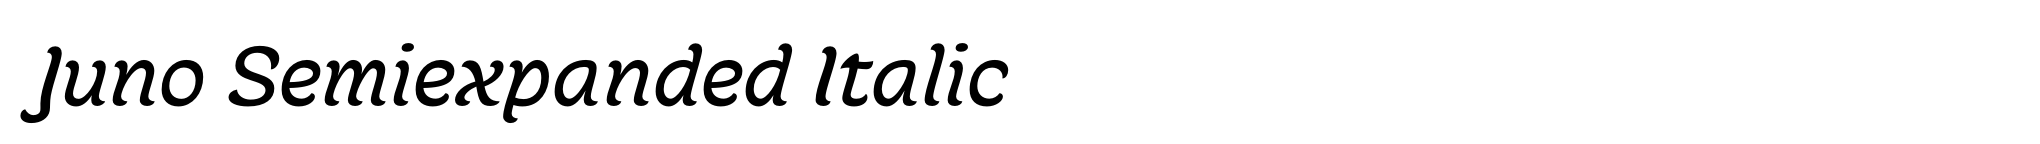 Juno Semiexpanded Italic image